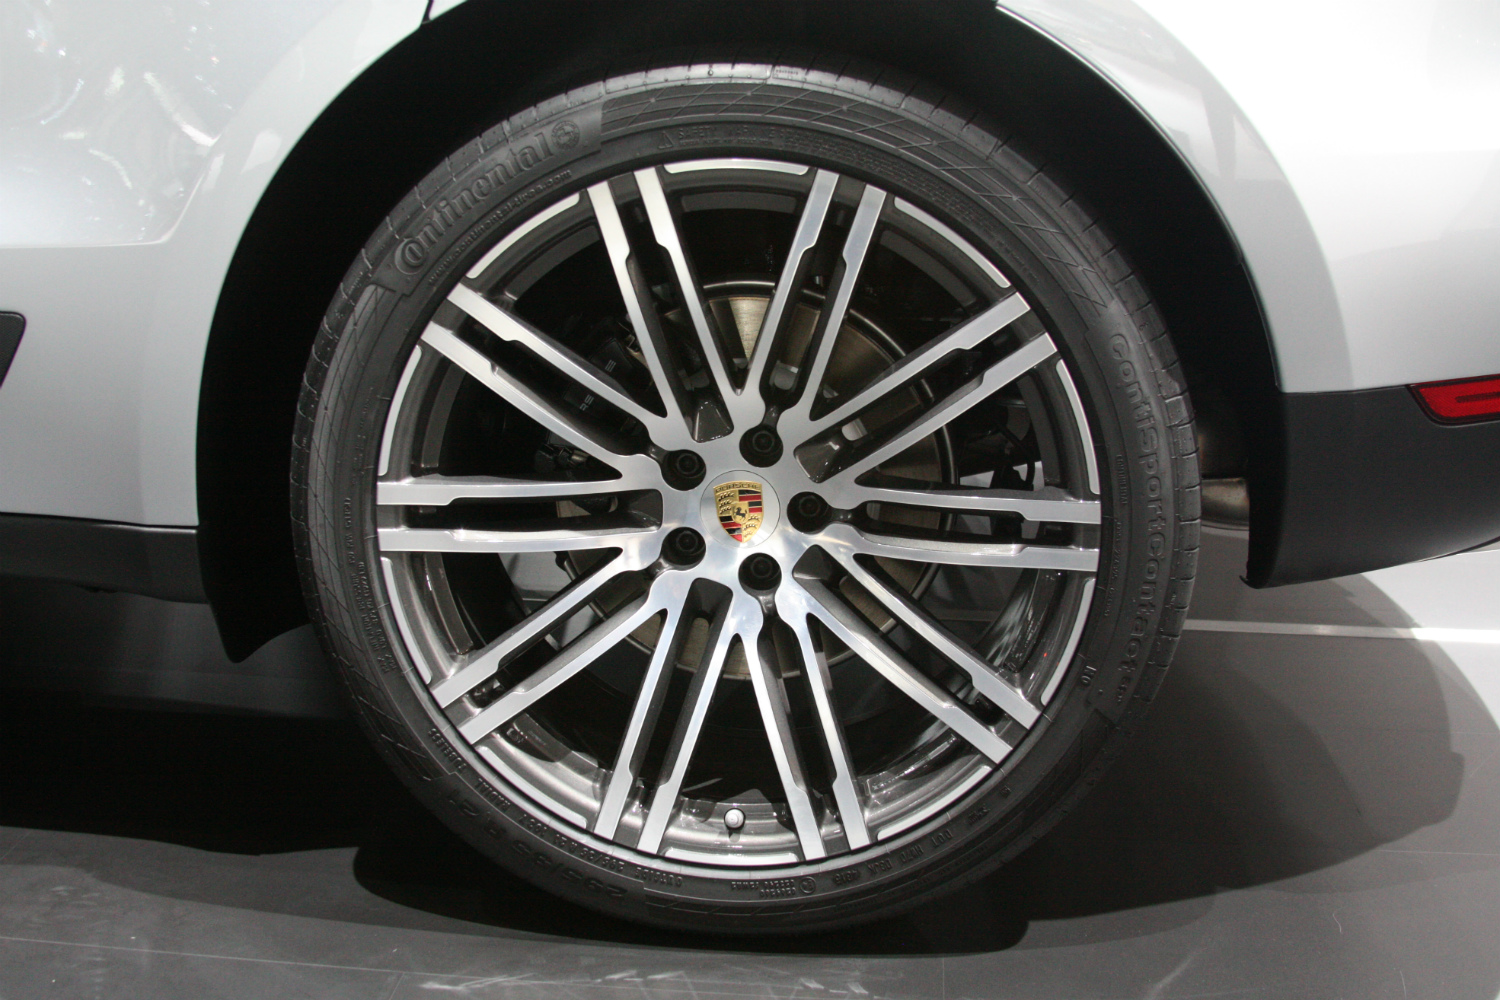 2017 Porsche Macan wheel